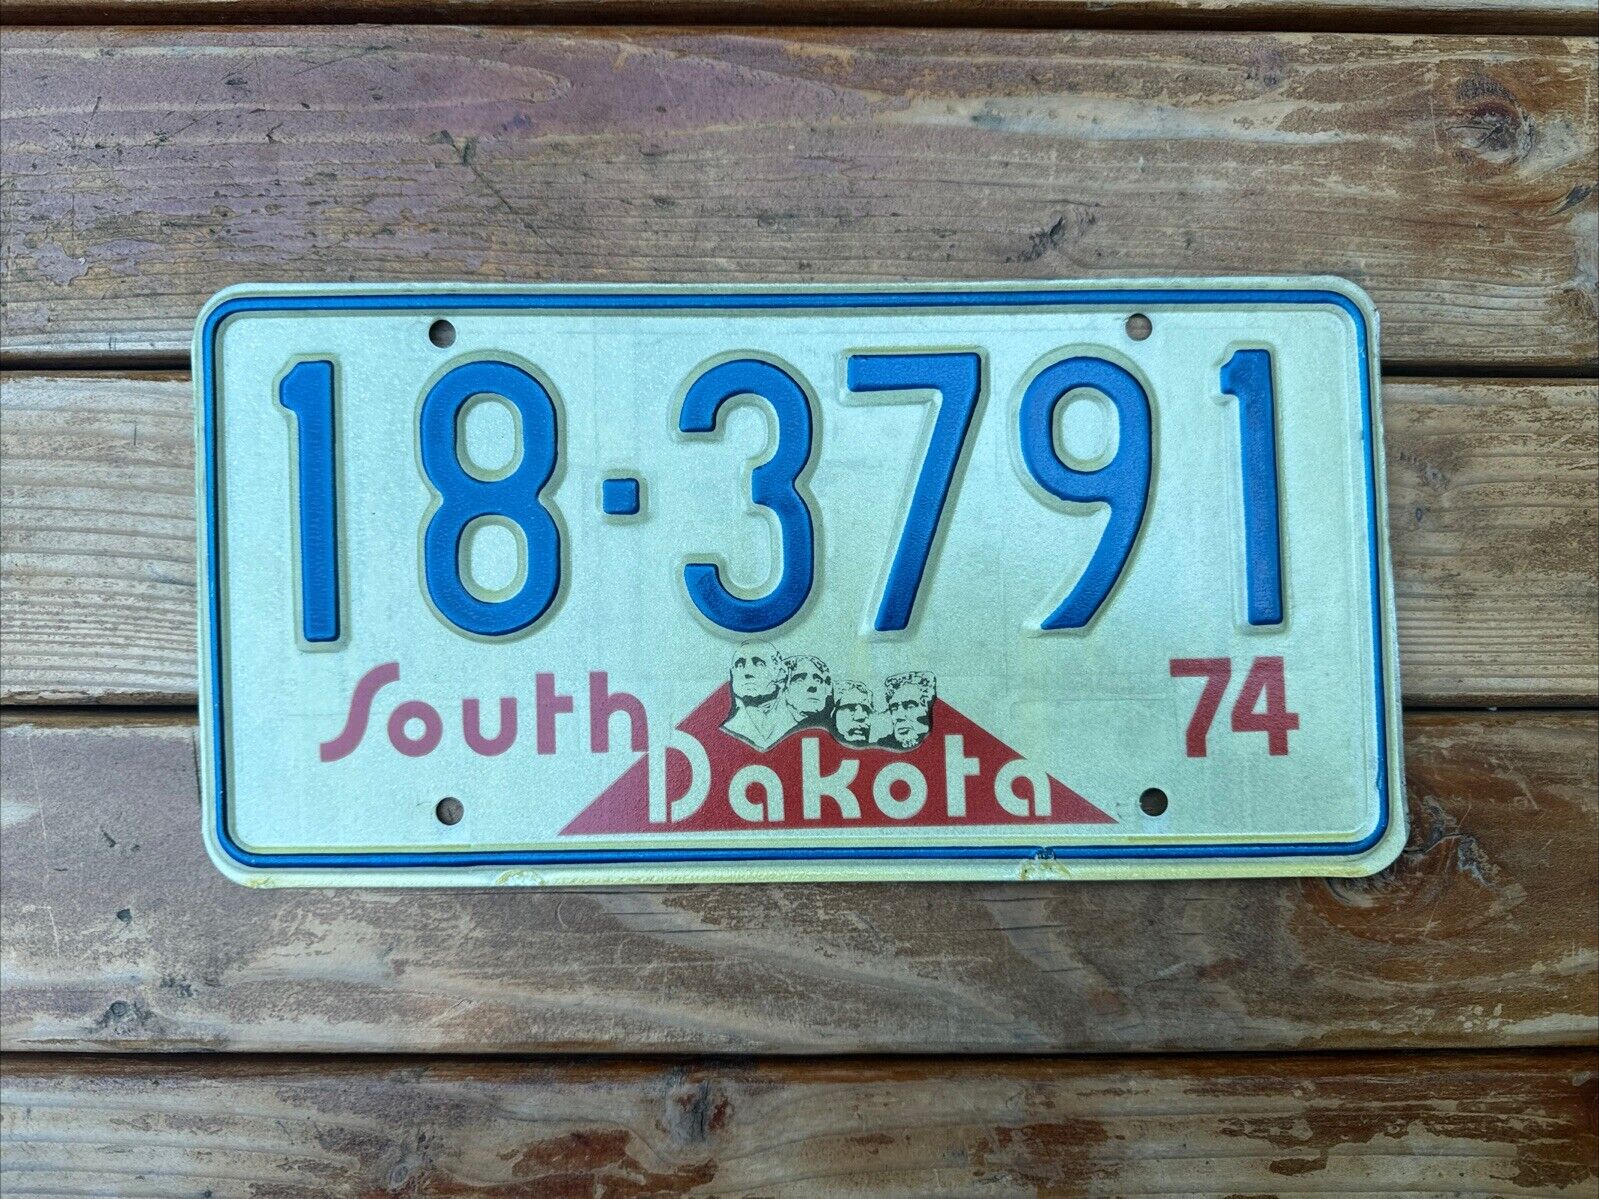 1974 South Dakota License Plates - Clark County - 18-3791